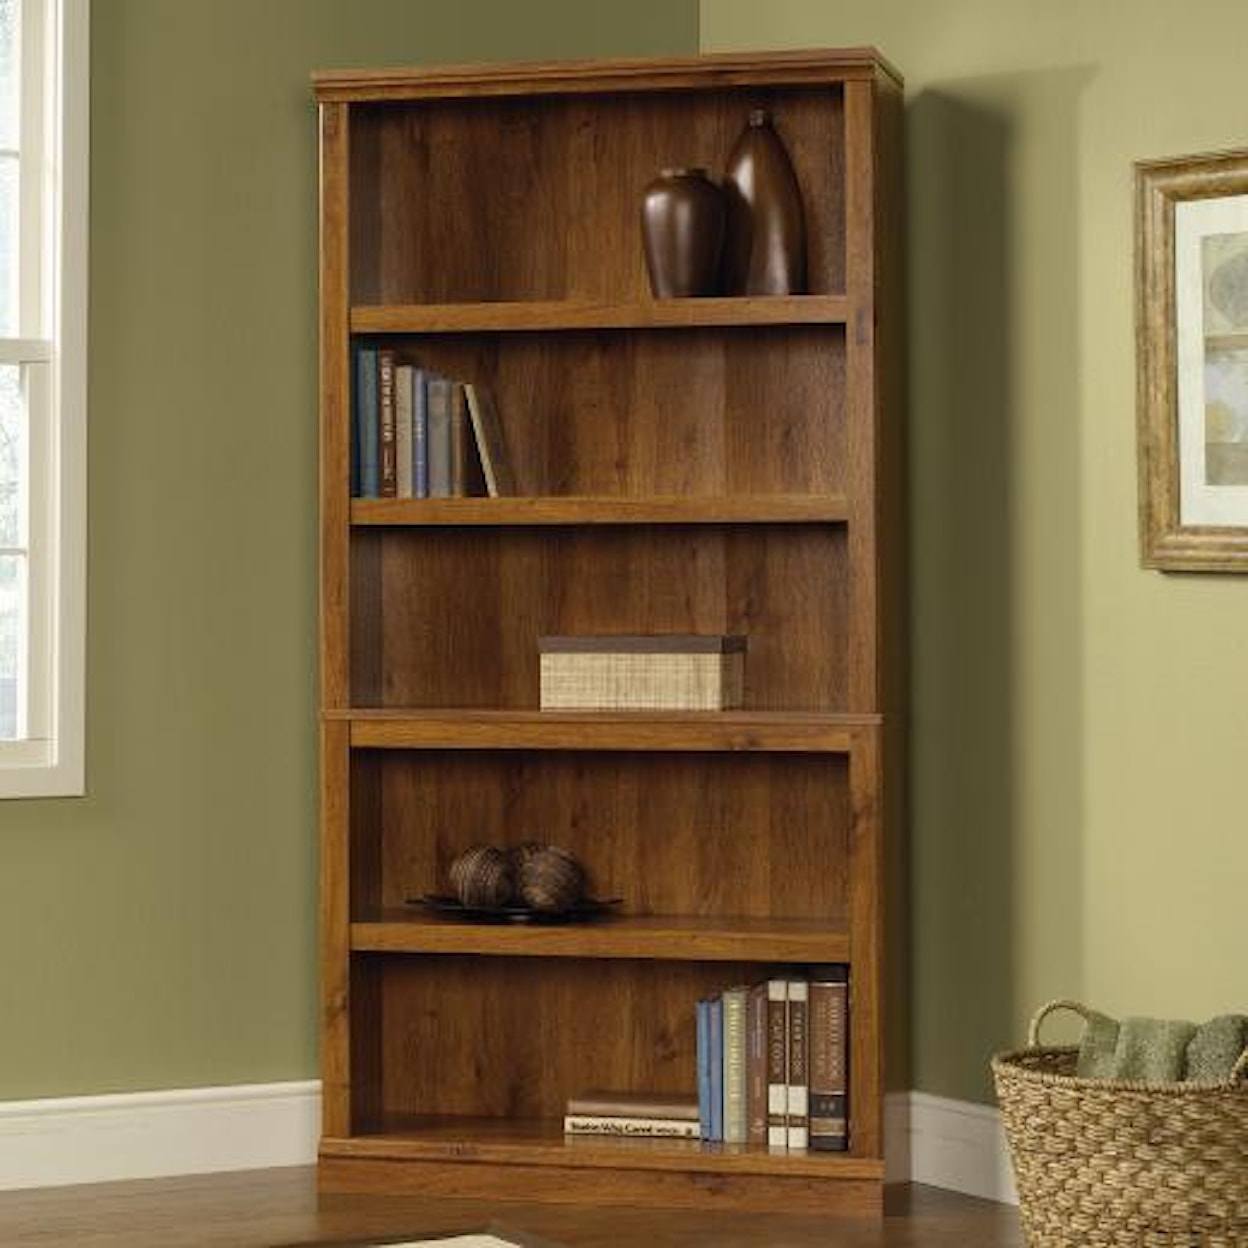 Sauder Bookcases 5-Shelf Bookcase